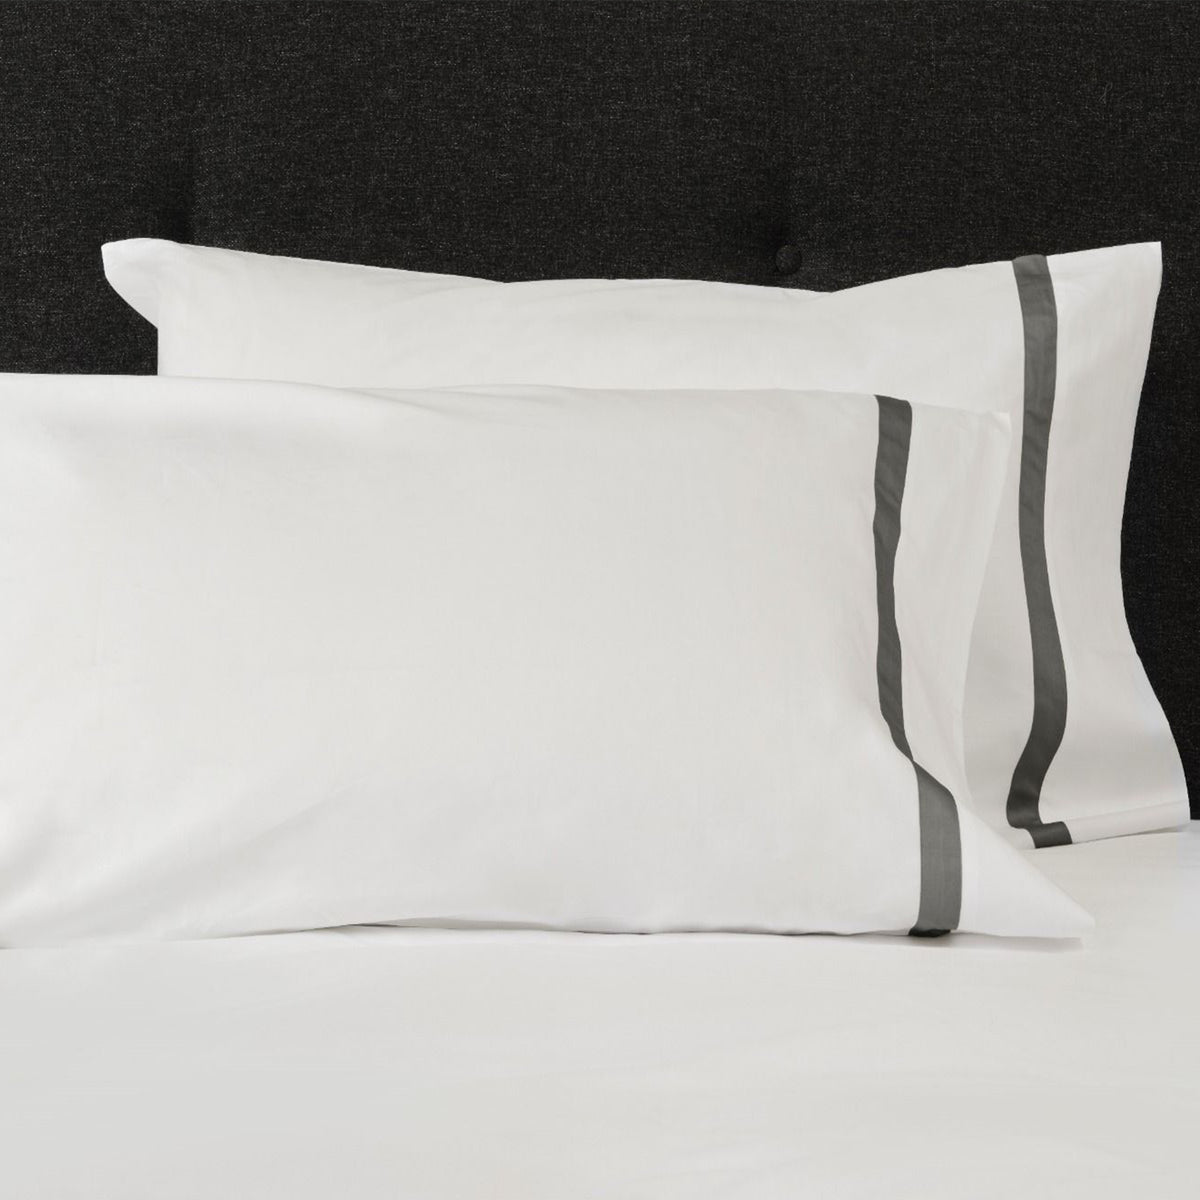 Pair of Pillowcases of Signoria Pegaso Bedding in White/Lead Grey Color